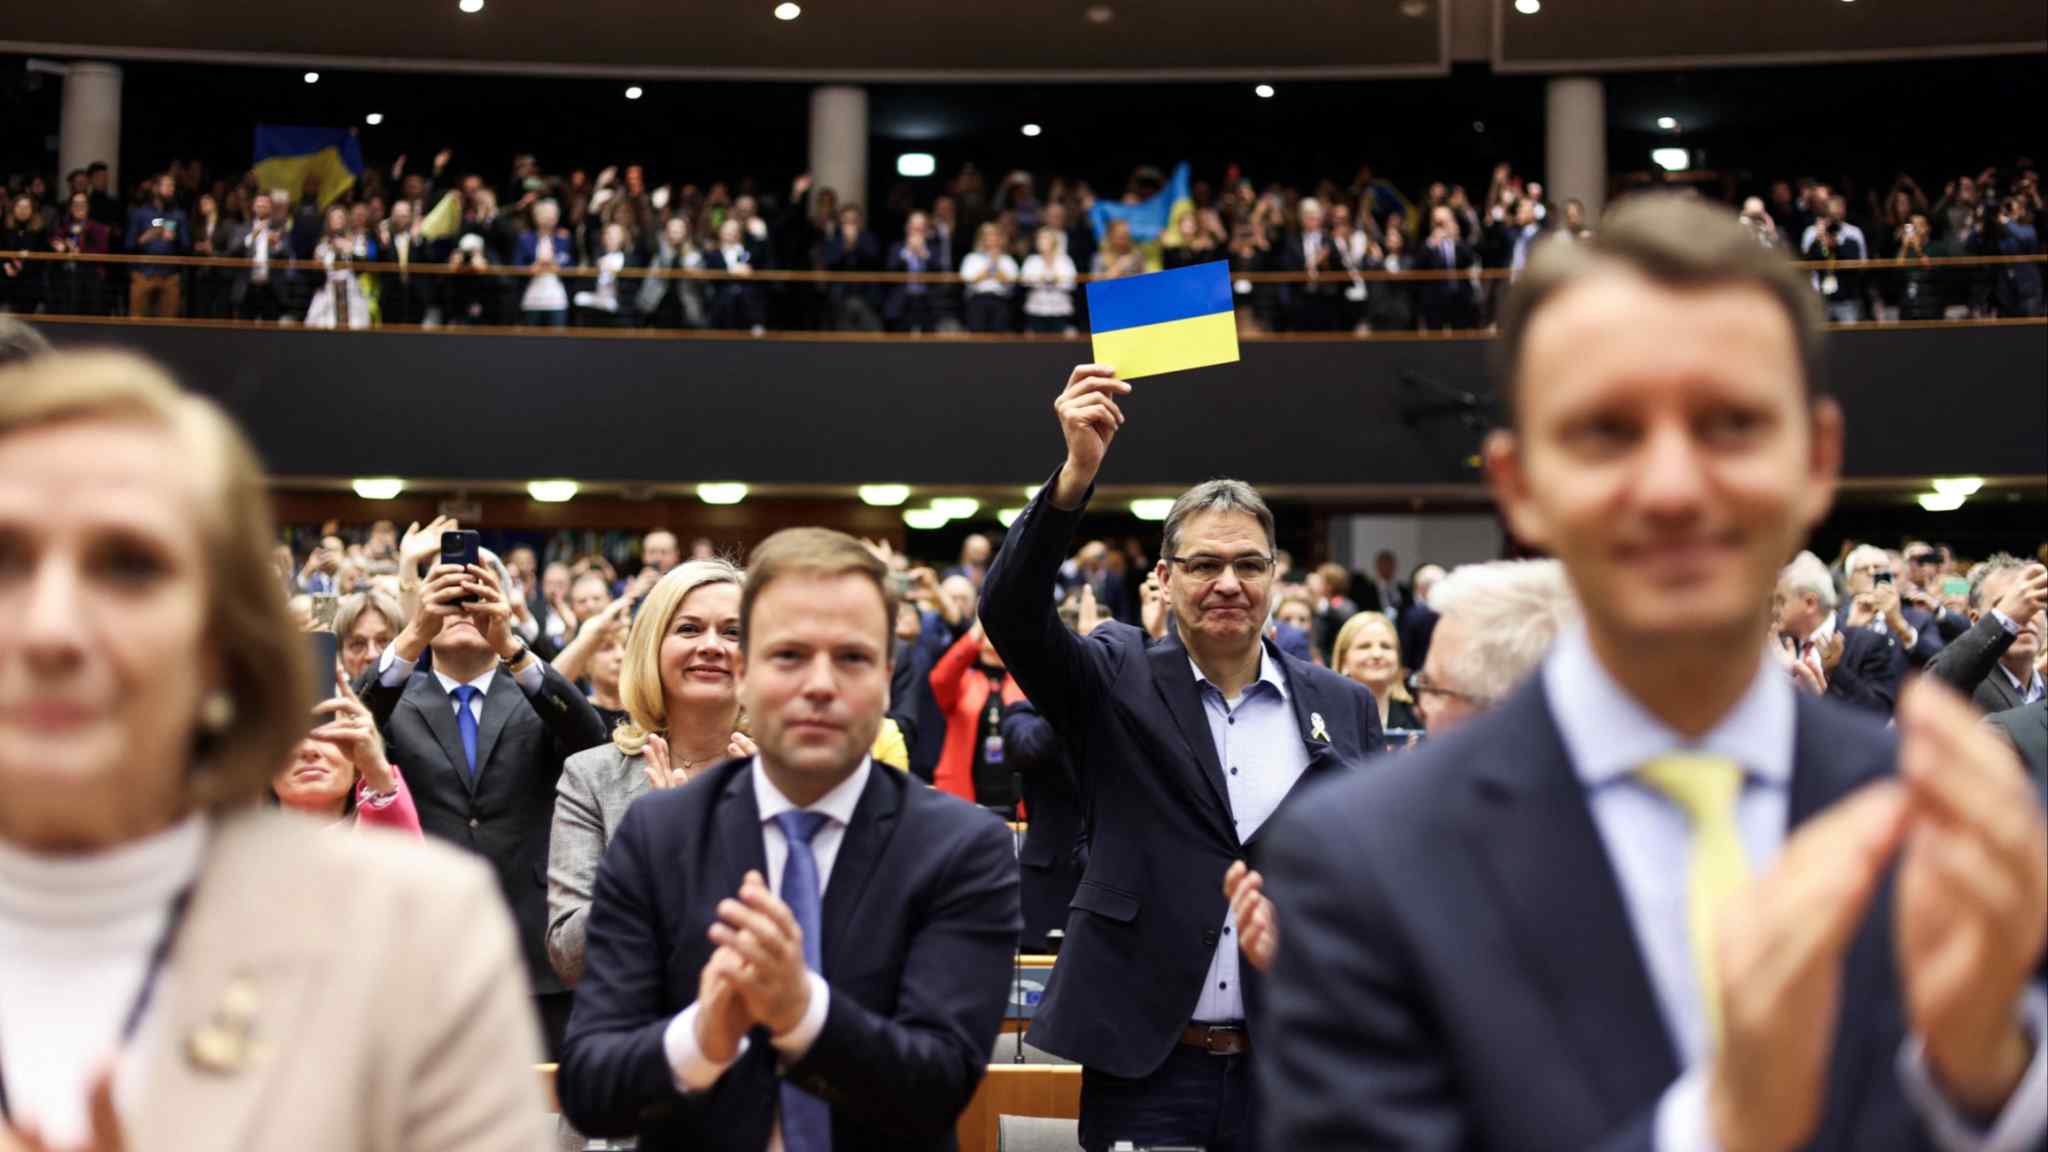 Putin has revived the EU’s dreams of enlargement